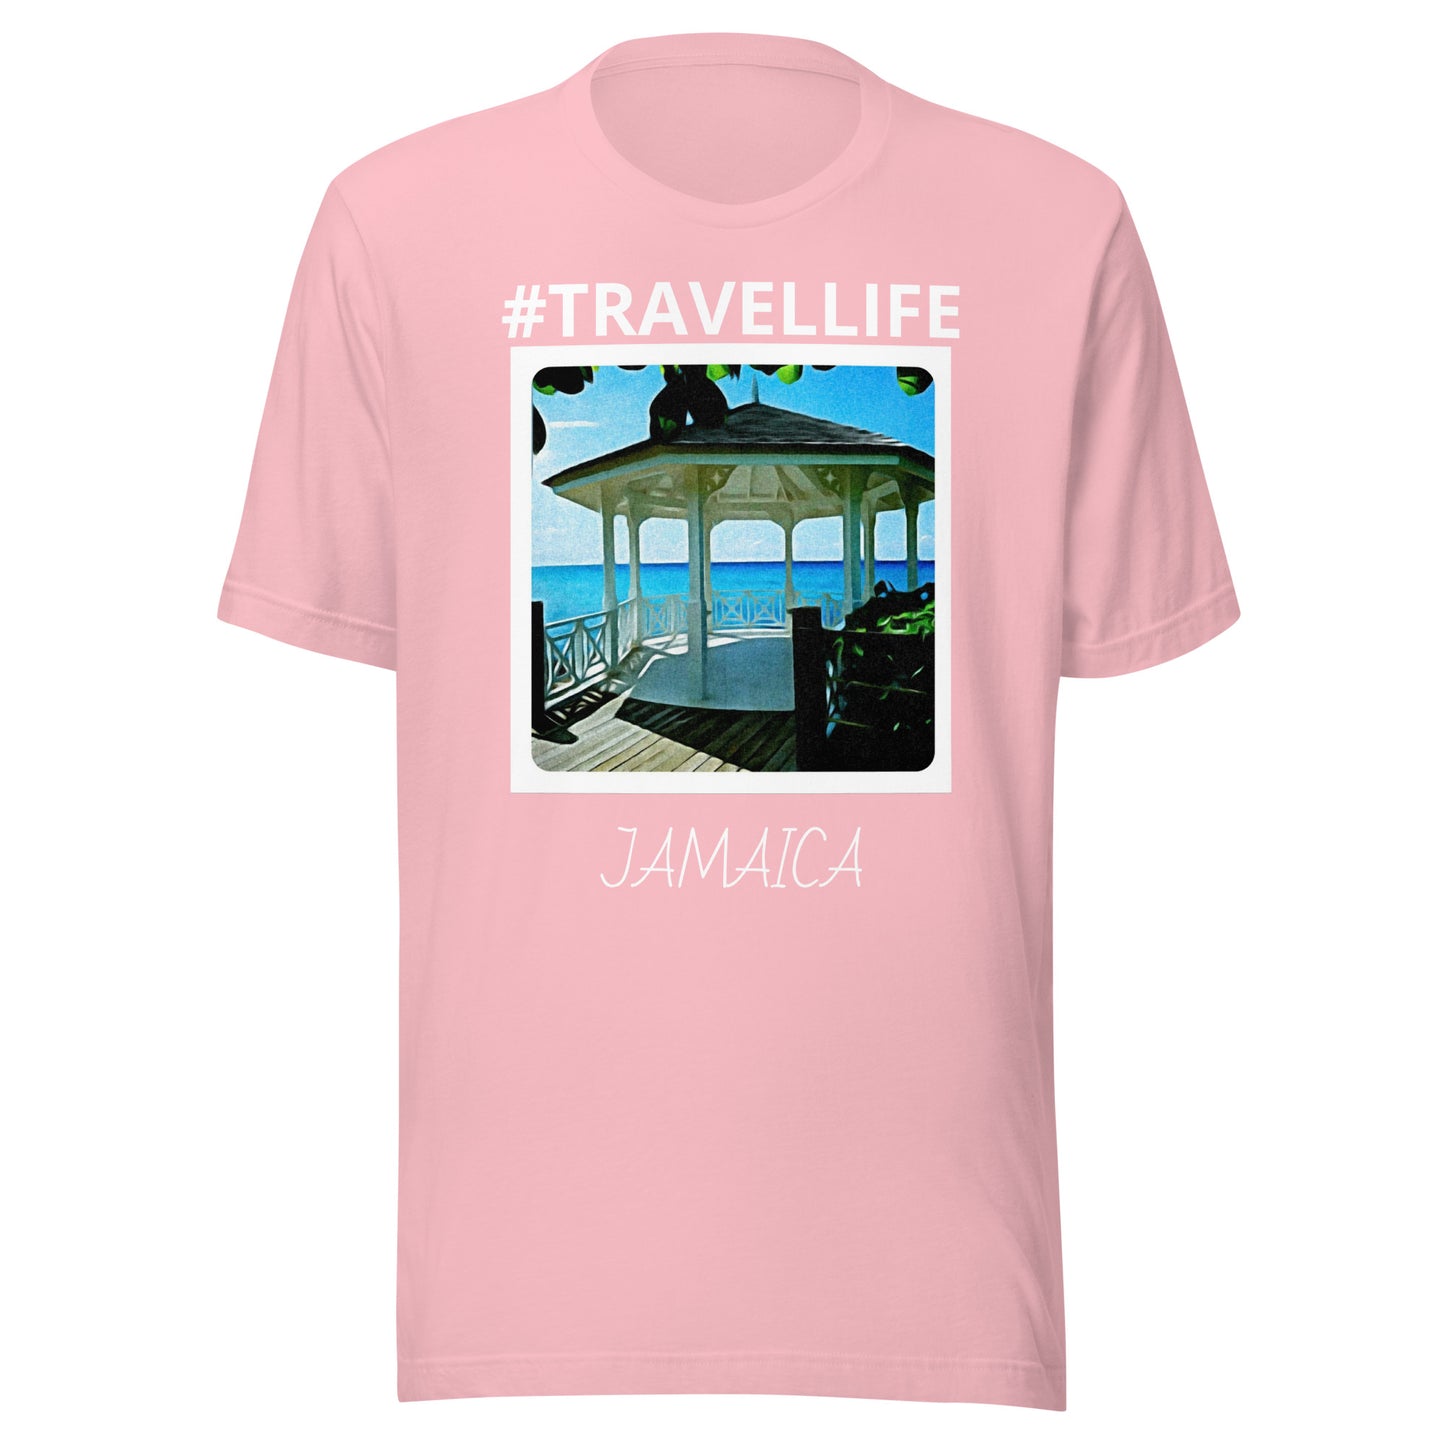 #Travellife Jamaica Beach Gazebo Unisex t-shirt white text